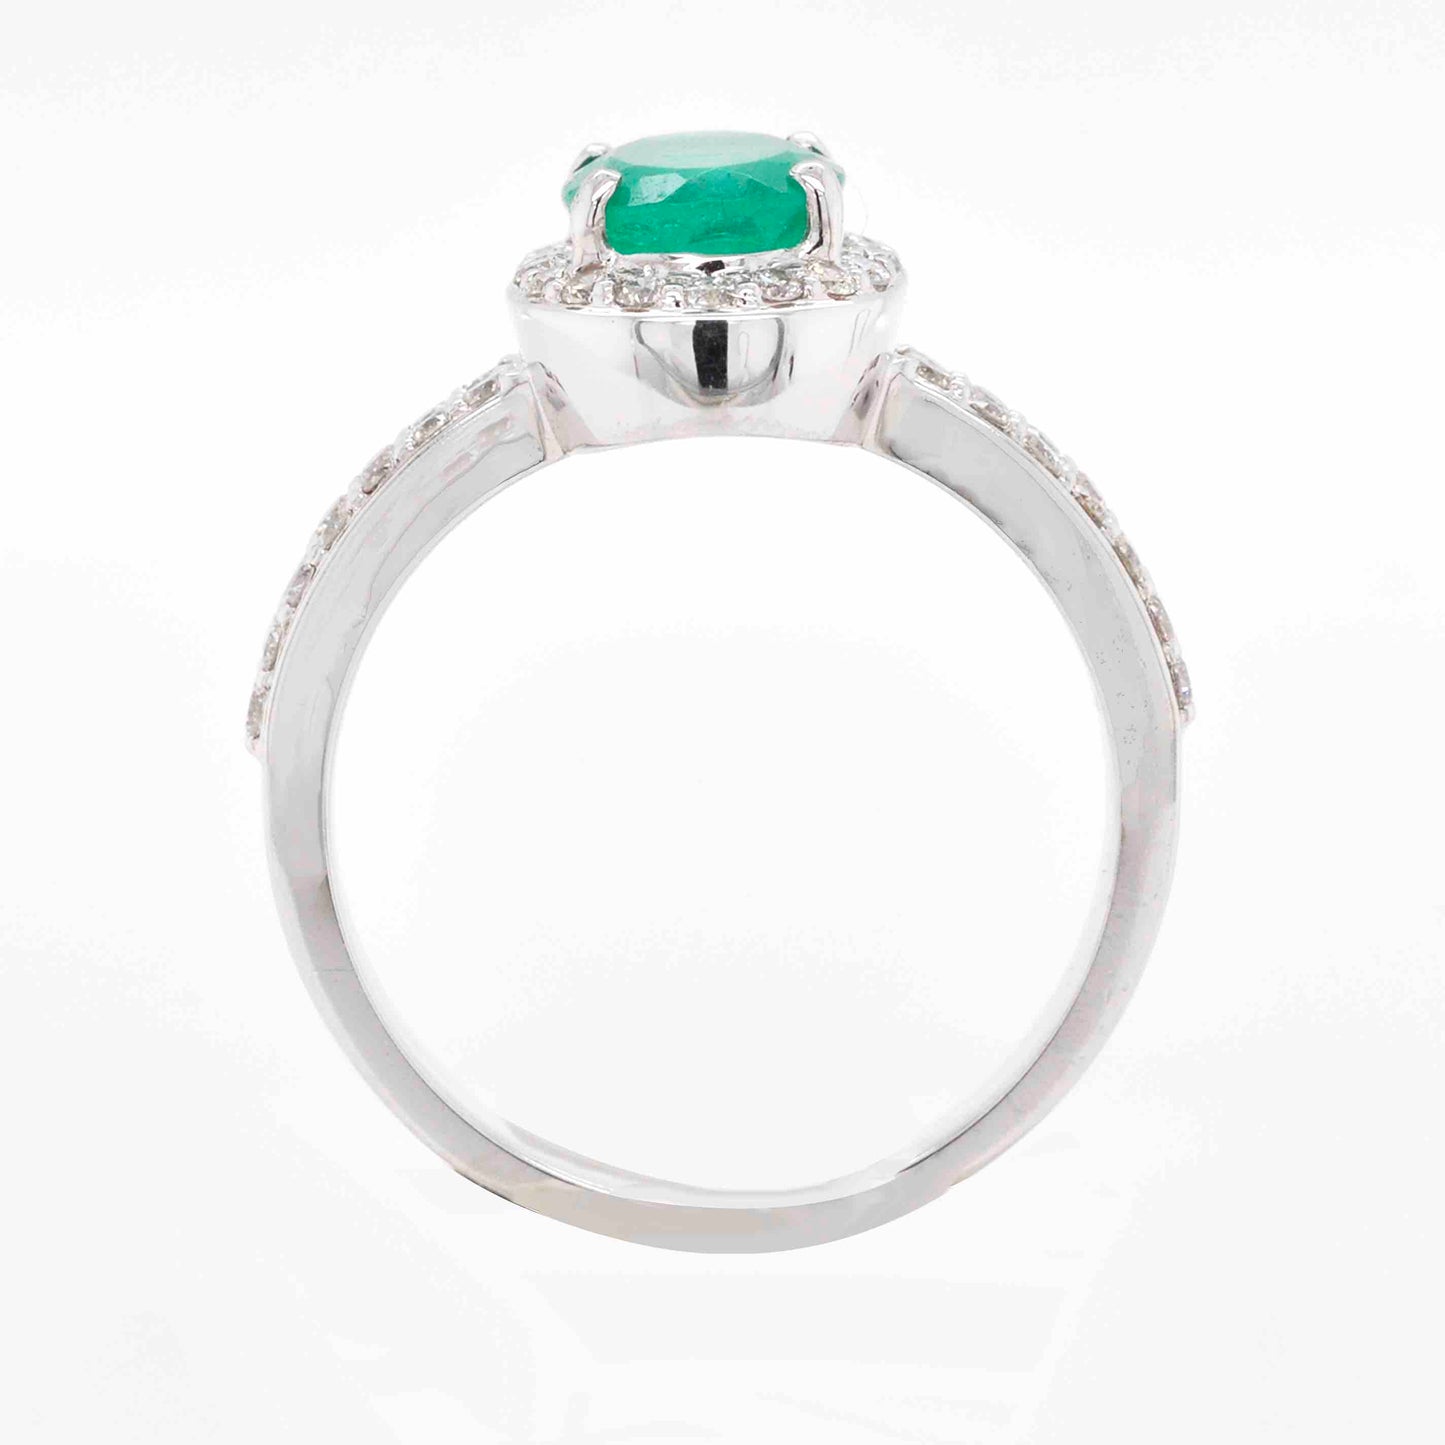  Diamond and Emerald Ring